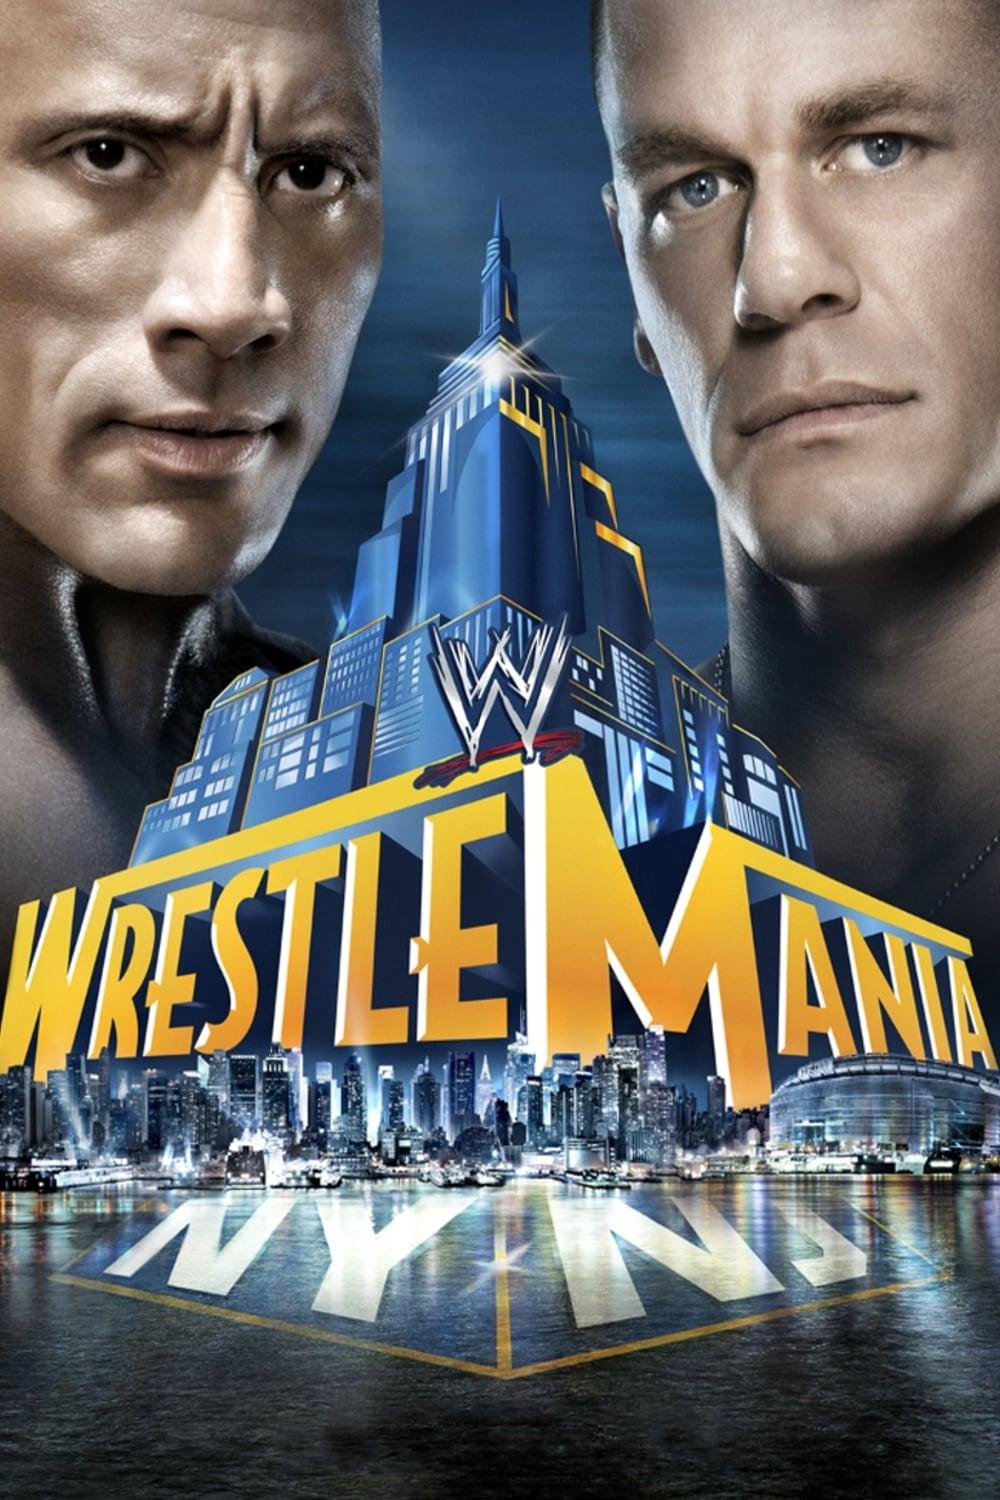 WWE WrestleMania 29 poster